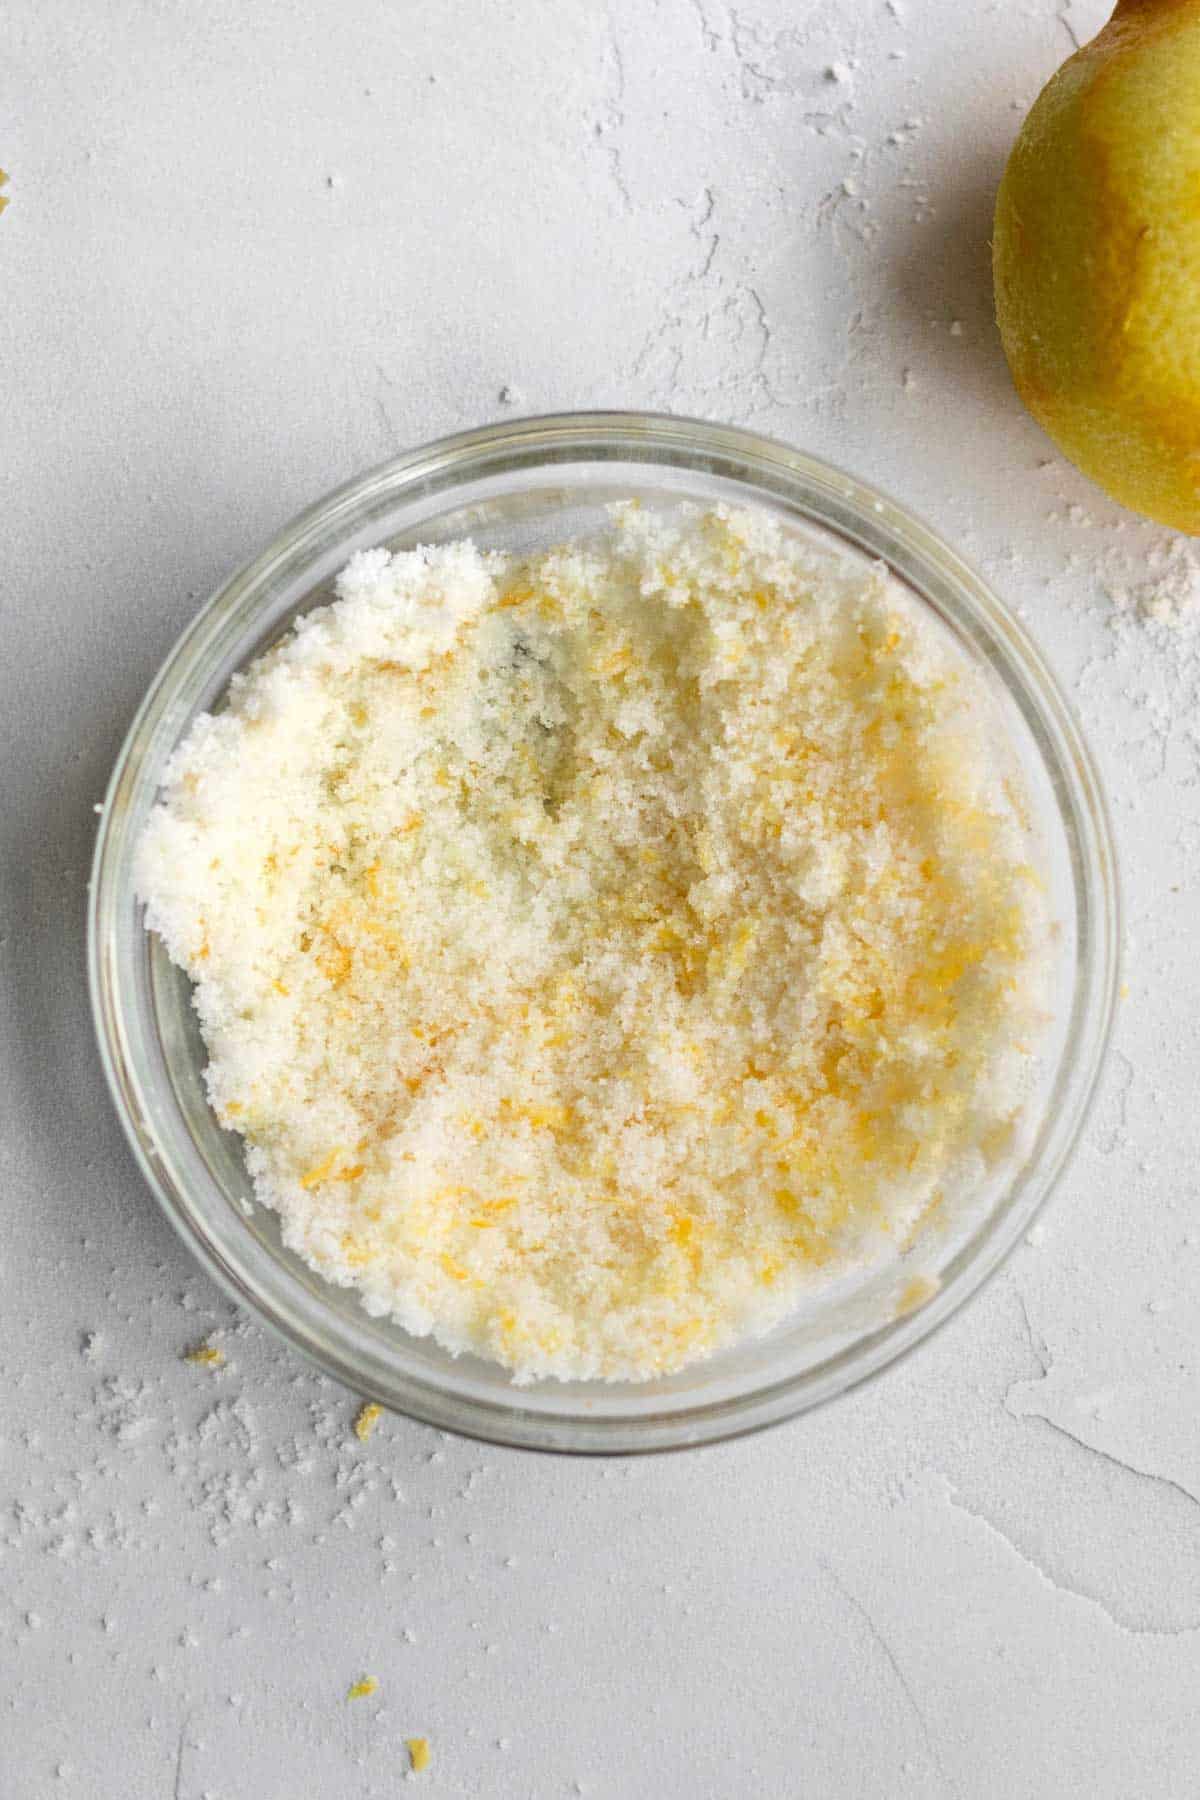 Lemon zest mixed into the bowl of sugar.